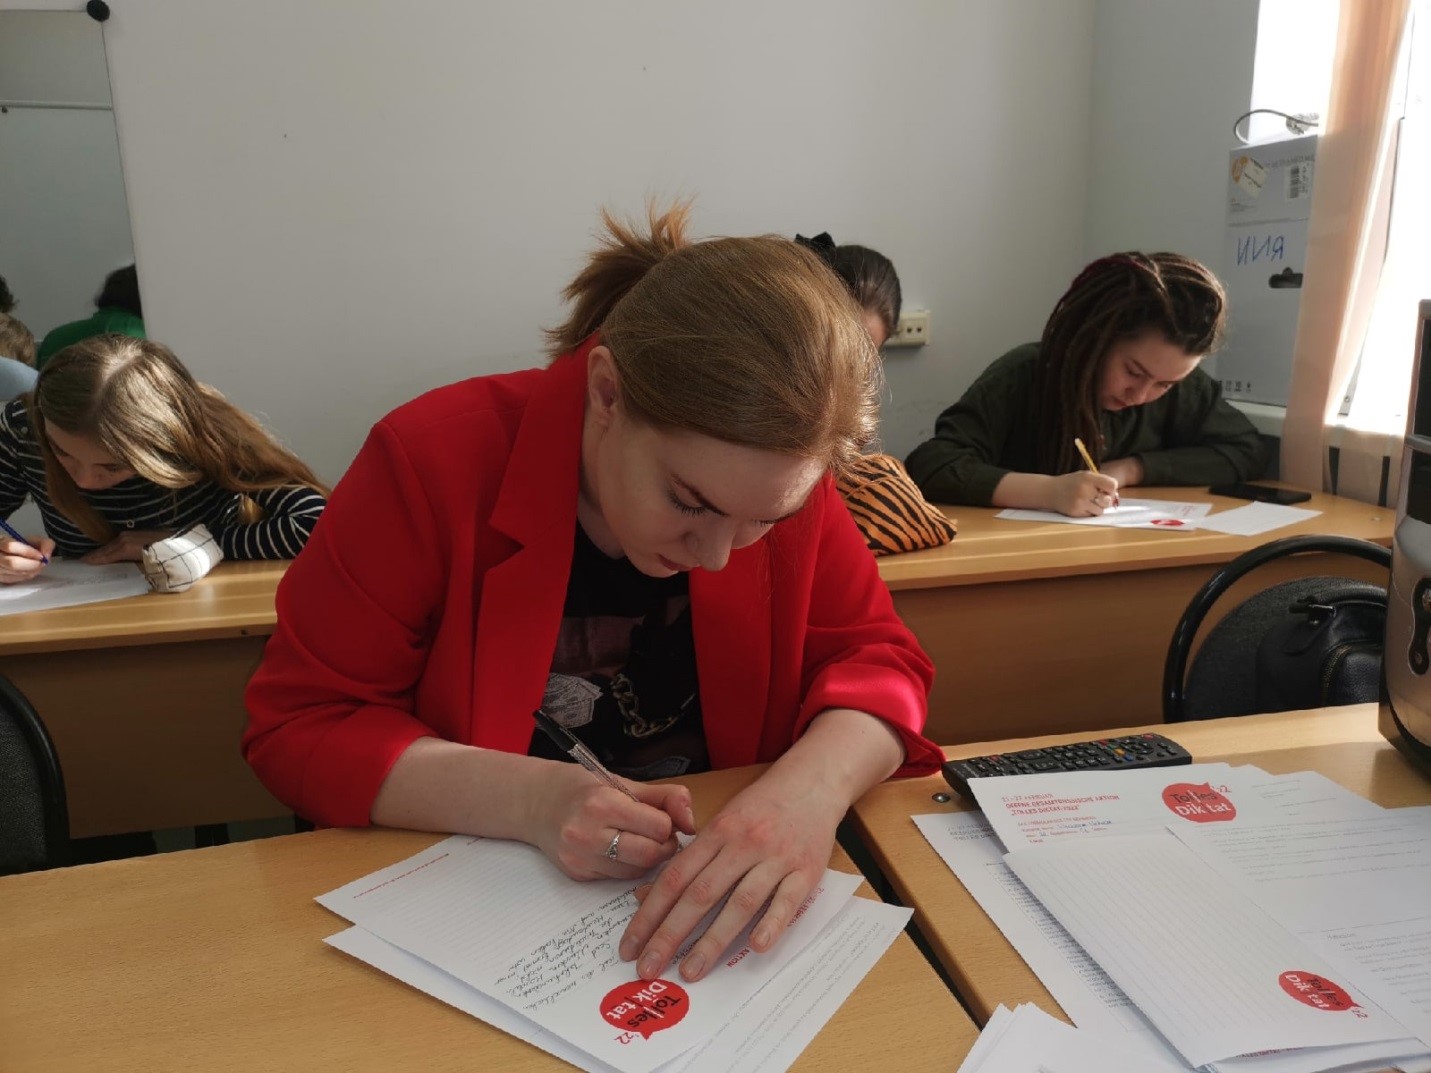 Tolles Diktat-2022: студенты написали диктант на немецком языке 